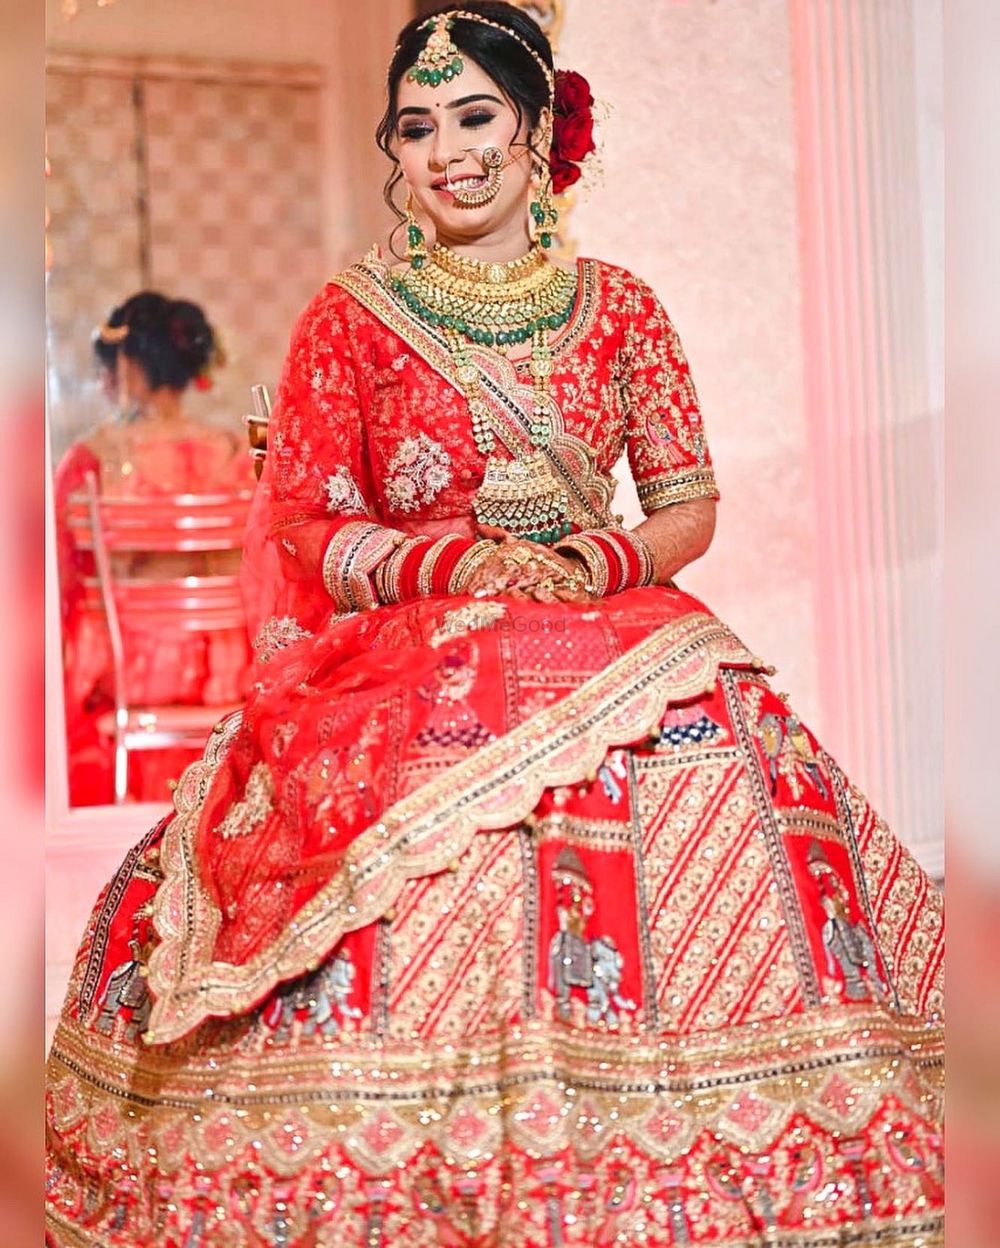 Photo From Brides - By Ankita Gupta Makeovers